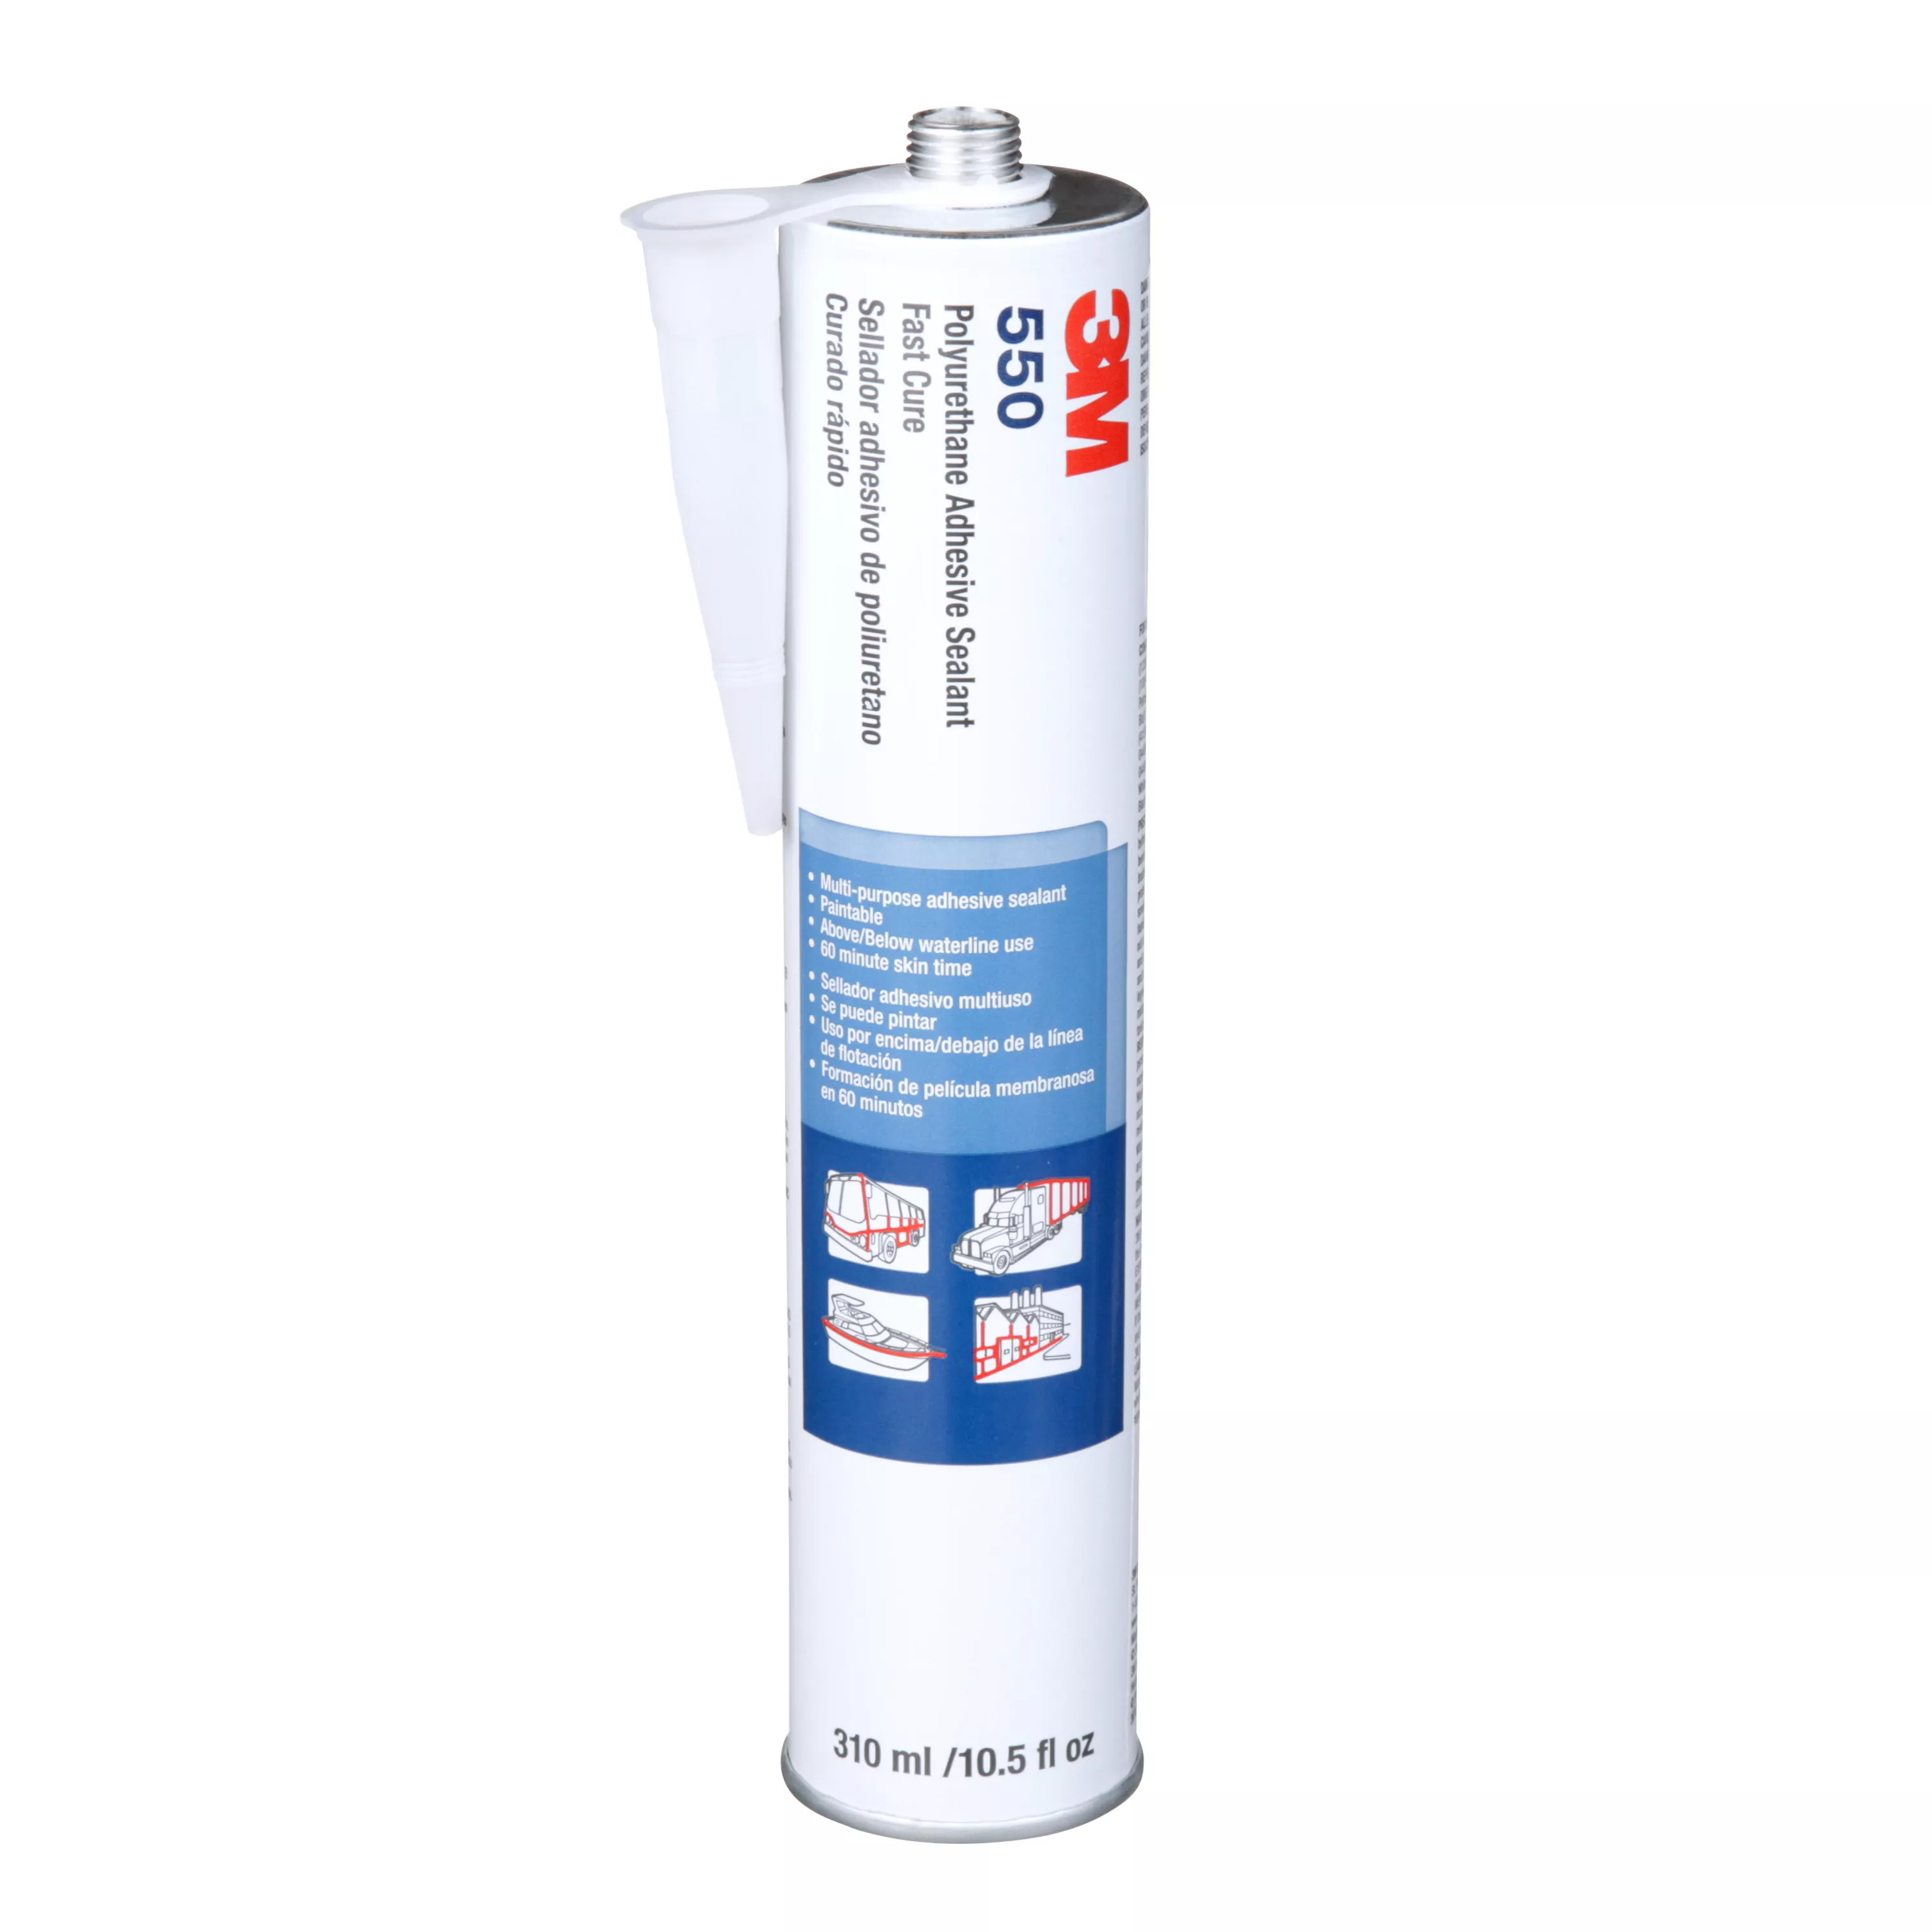 3M™ Polyurethane Adhesive Sealant 550FC, Fast Cure, White, 310 mL
Cartridge, 12/Case